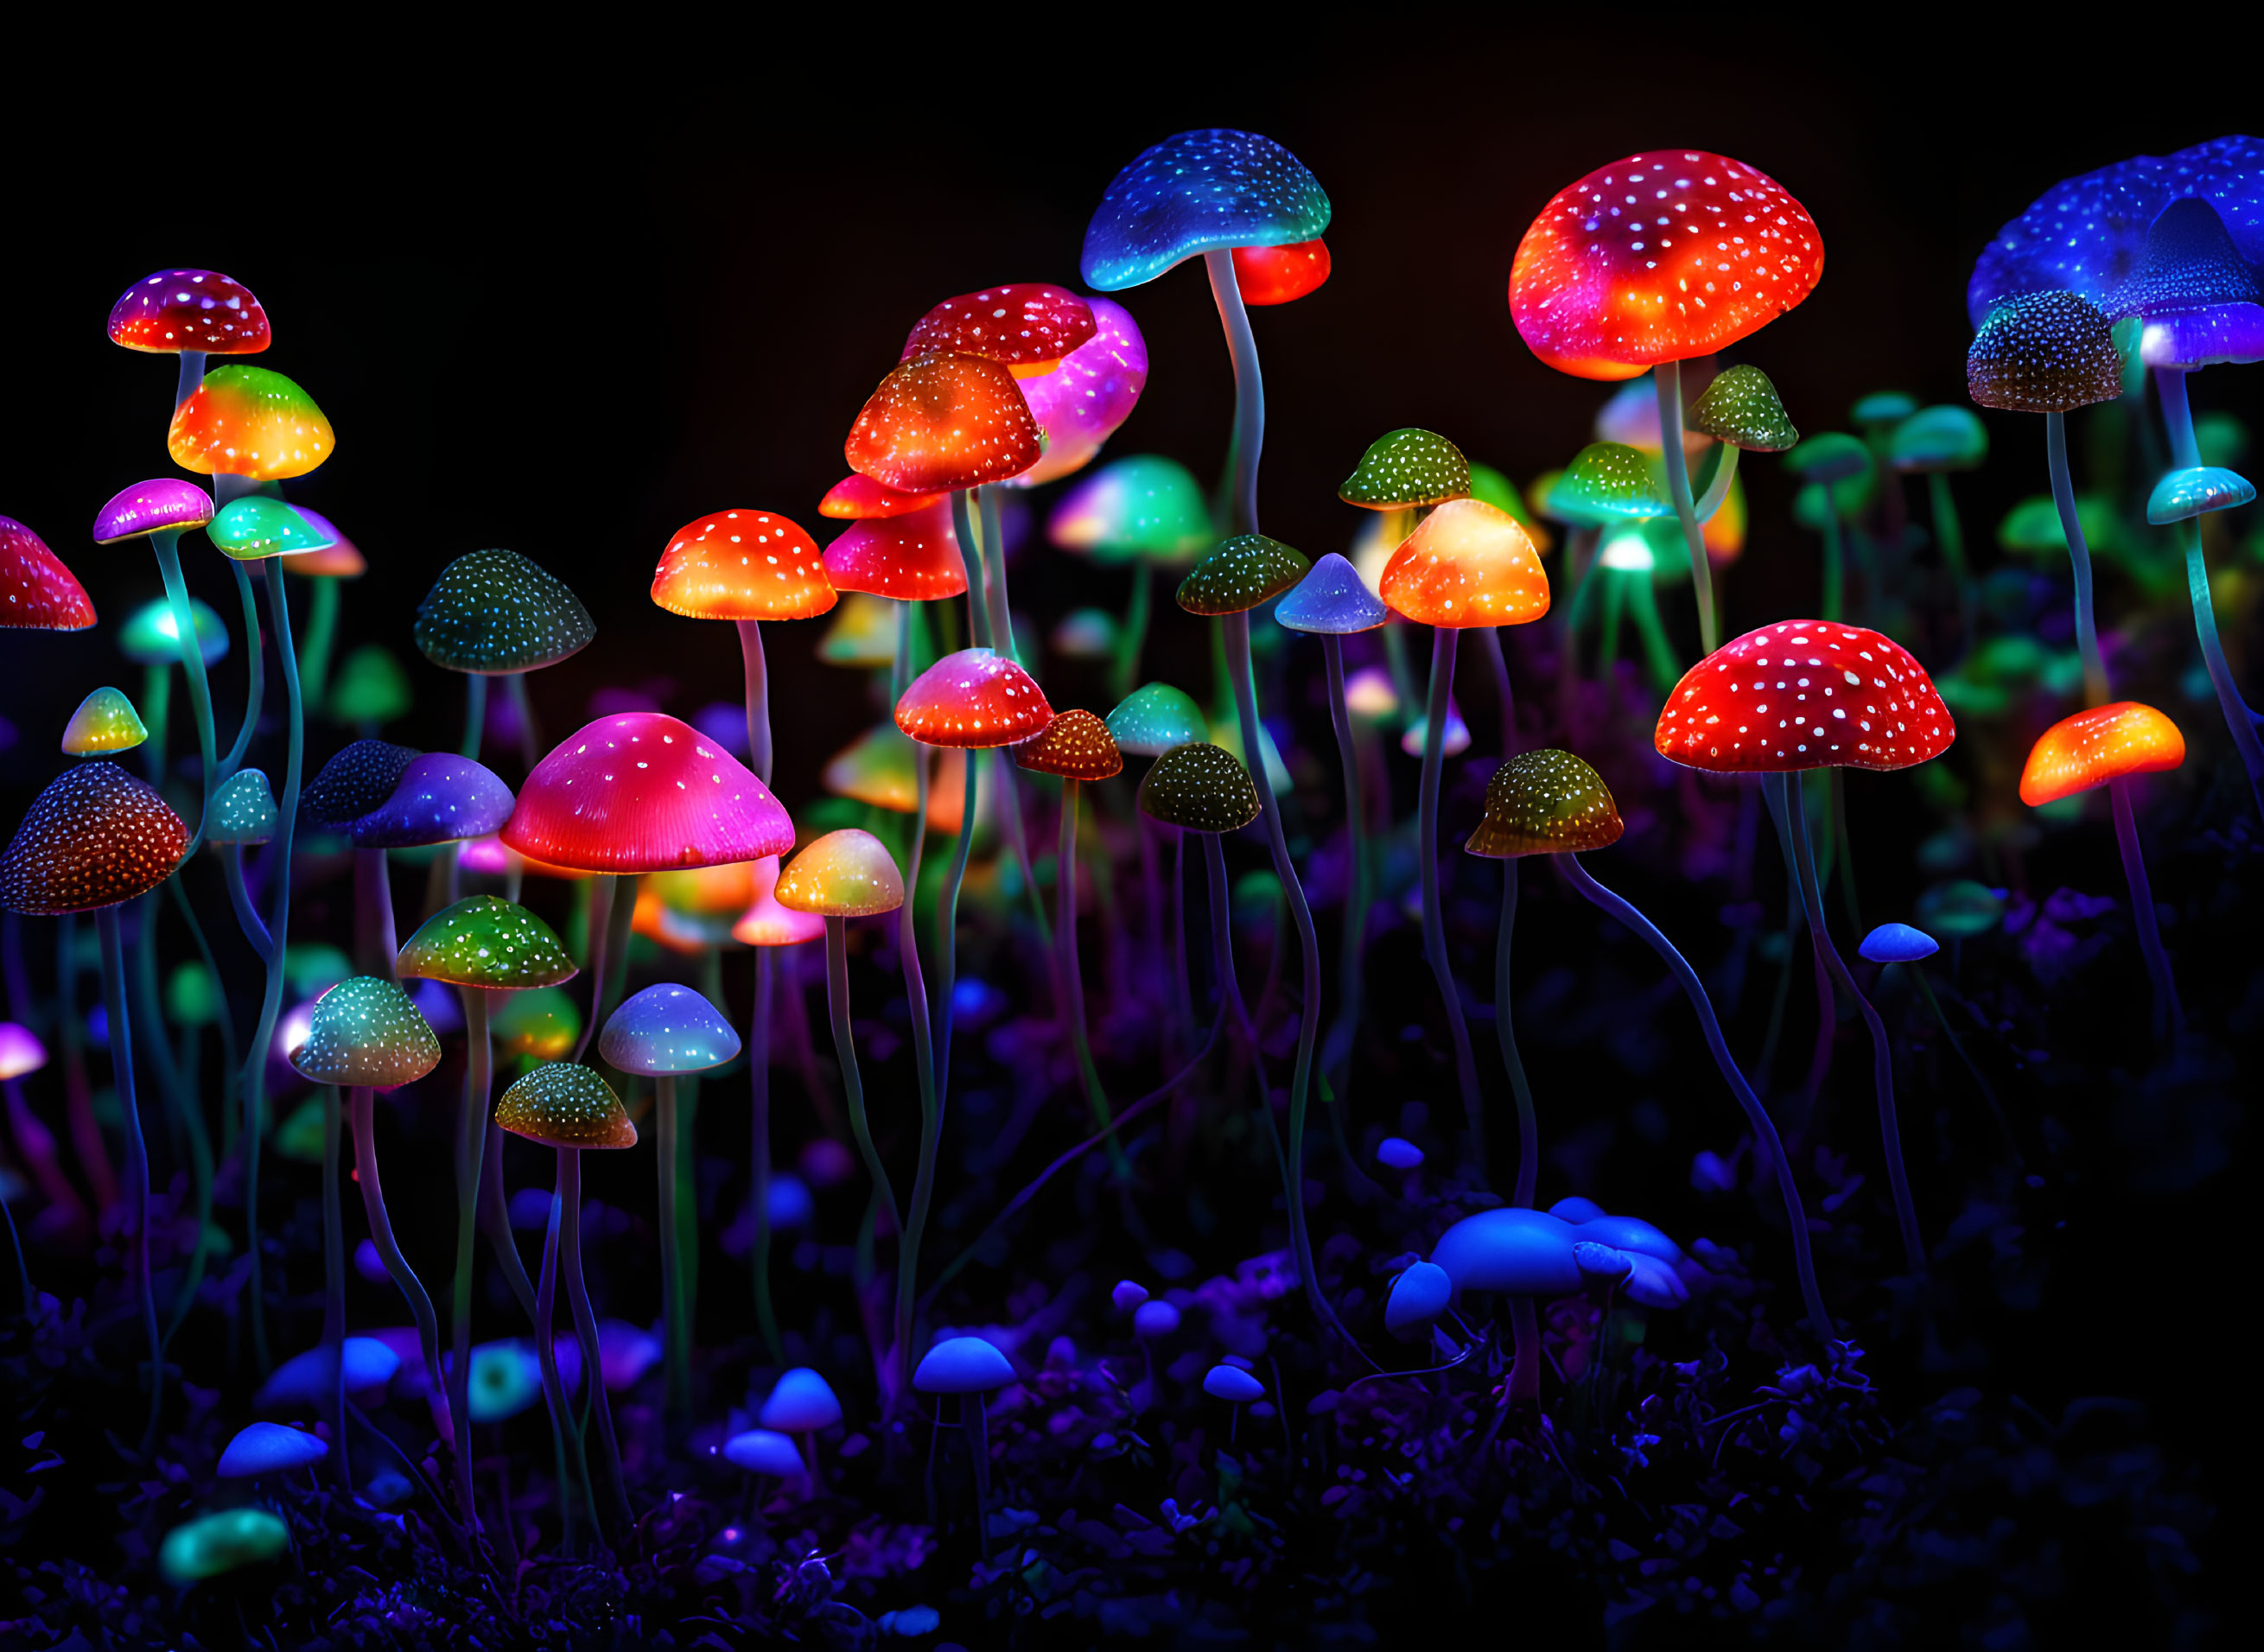 Mushrooms in the Night